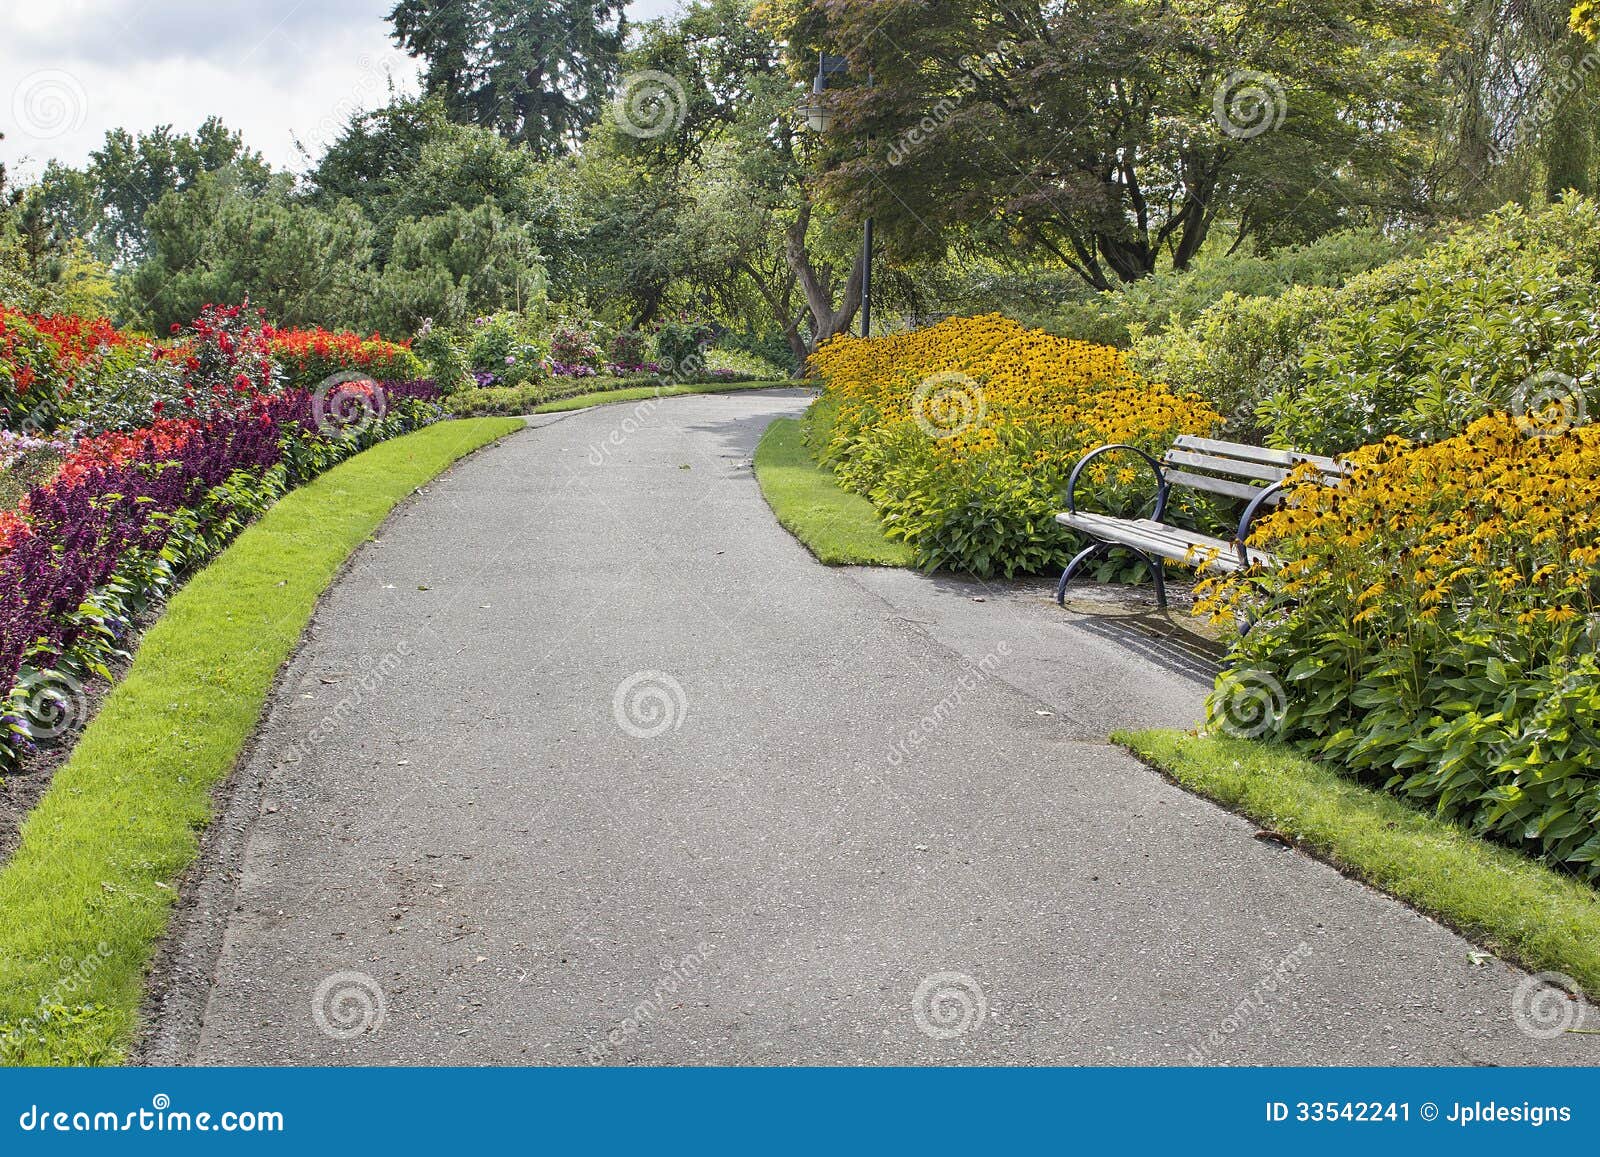 neighborhood parks flowers lined path